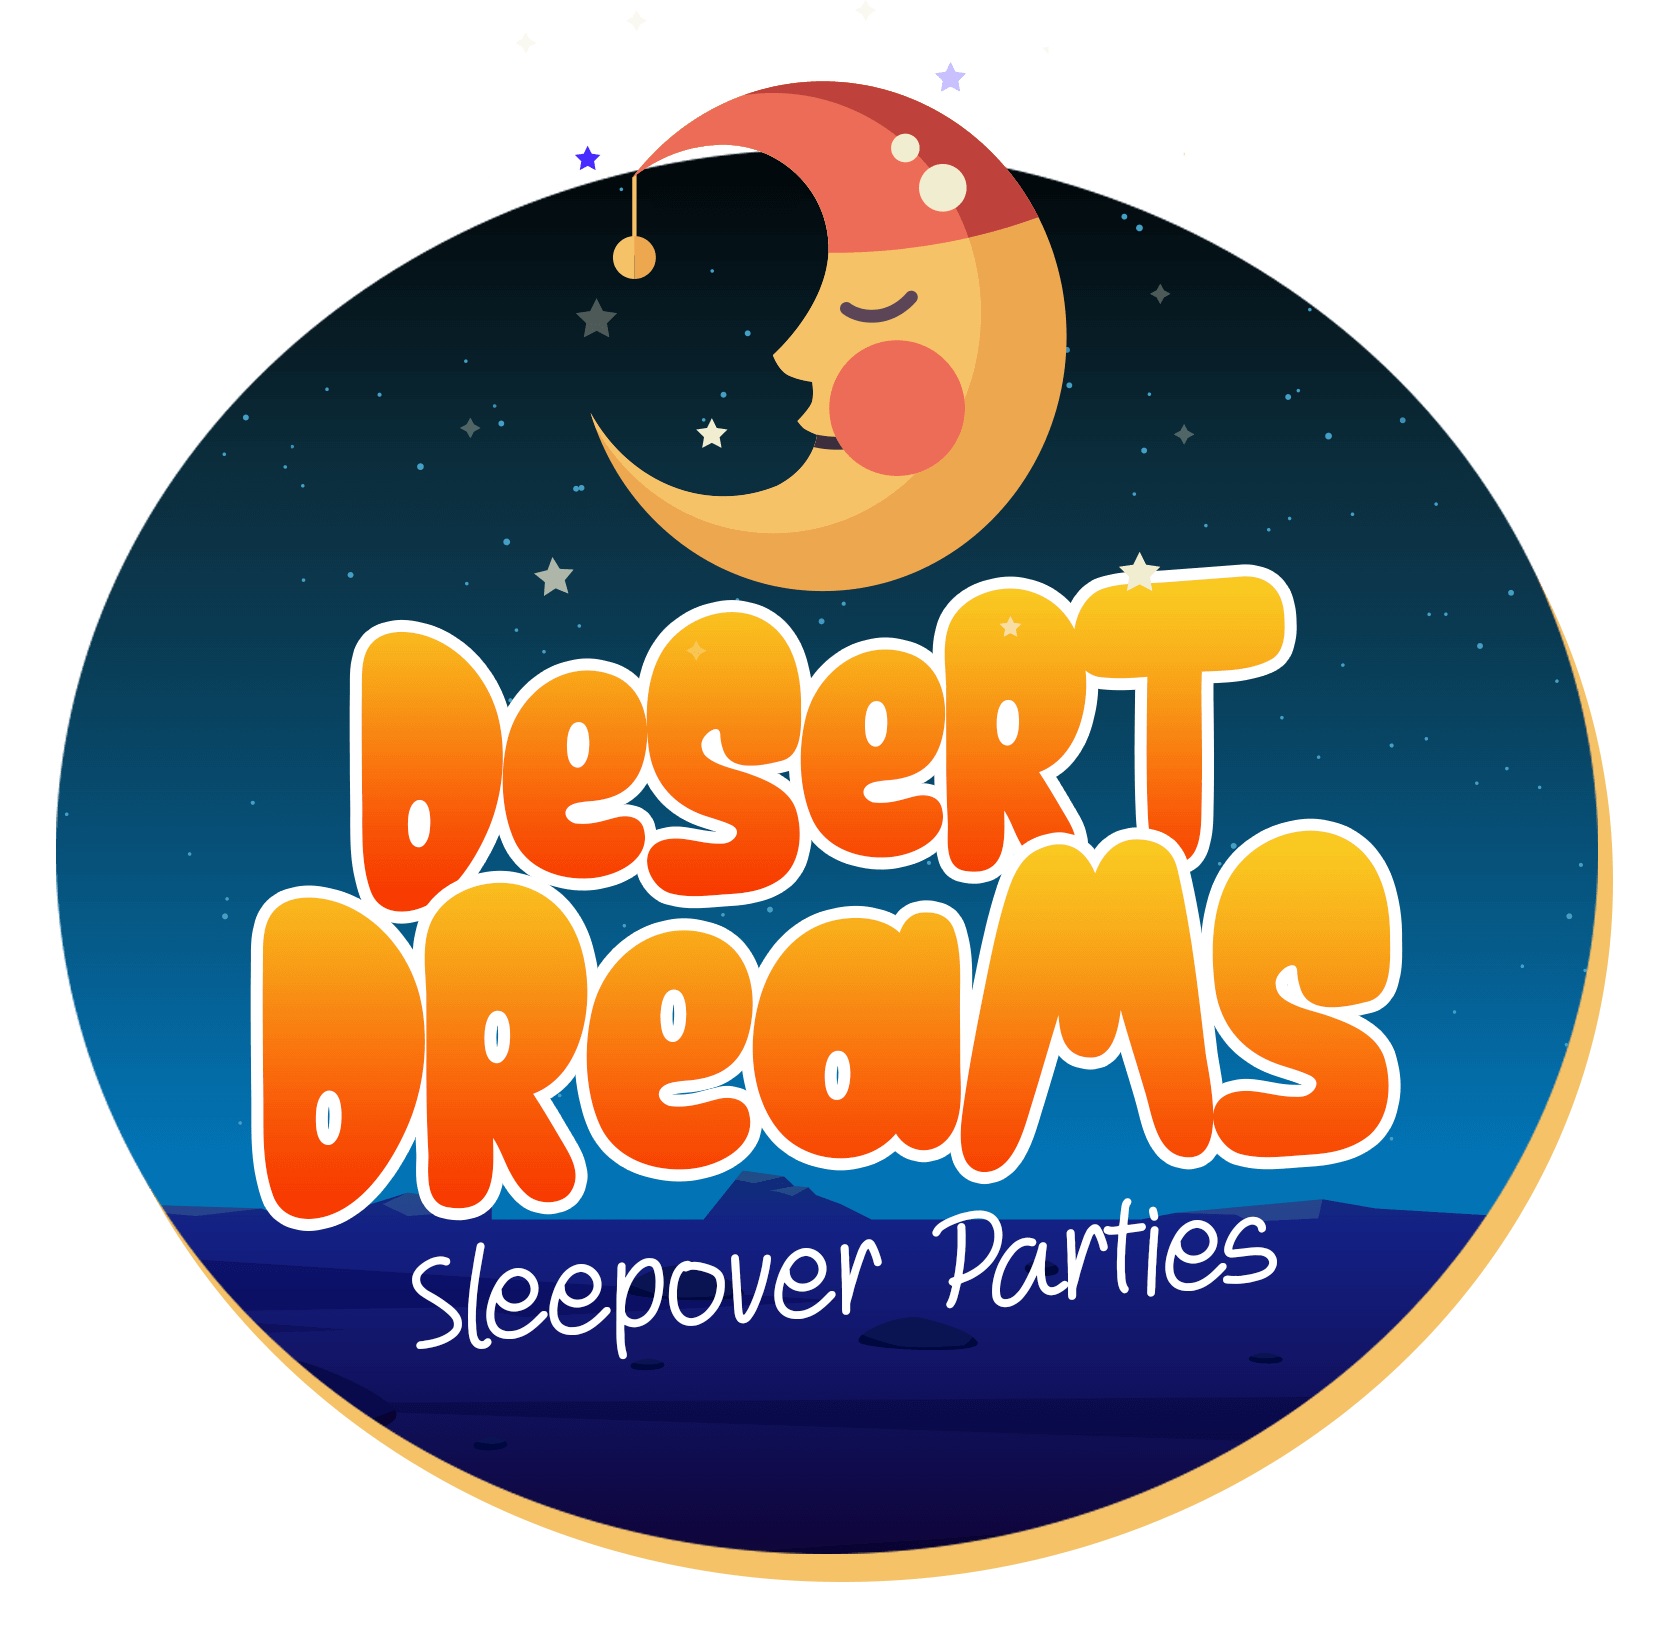 Desert Dreams Sleepover Parties logo.